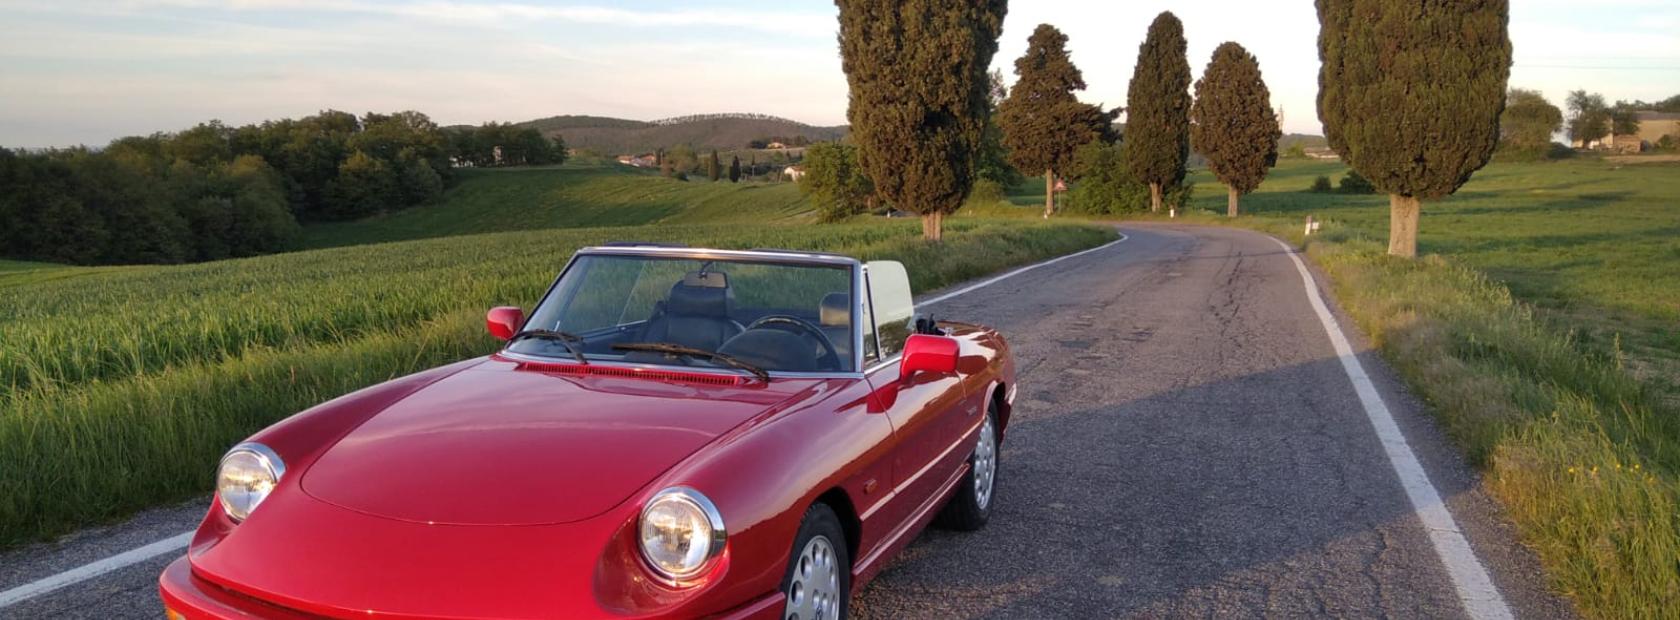 Vintage car rental in Montepulciano: red Duetto Spider Alfa Romeo